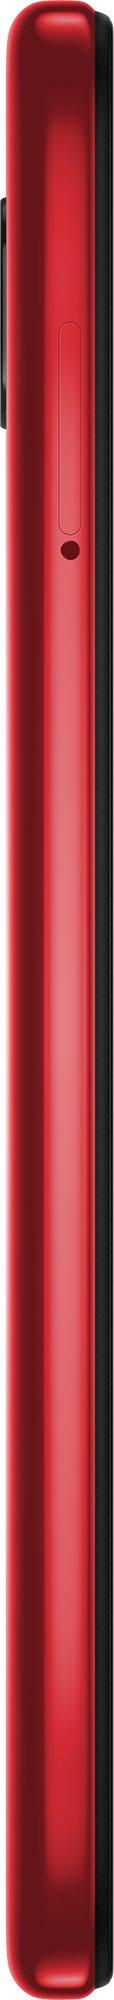 Смартфон Xiaomi Redmi 8 3/32Gb Ruby Red заказать